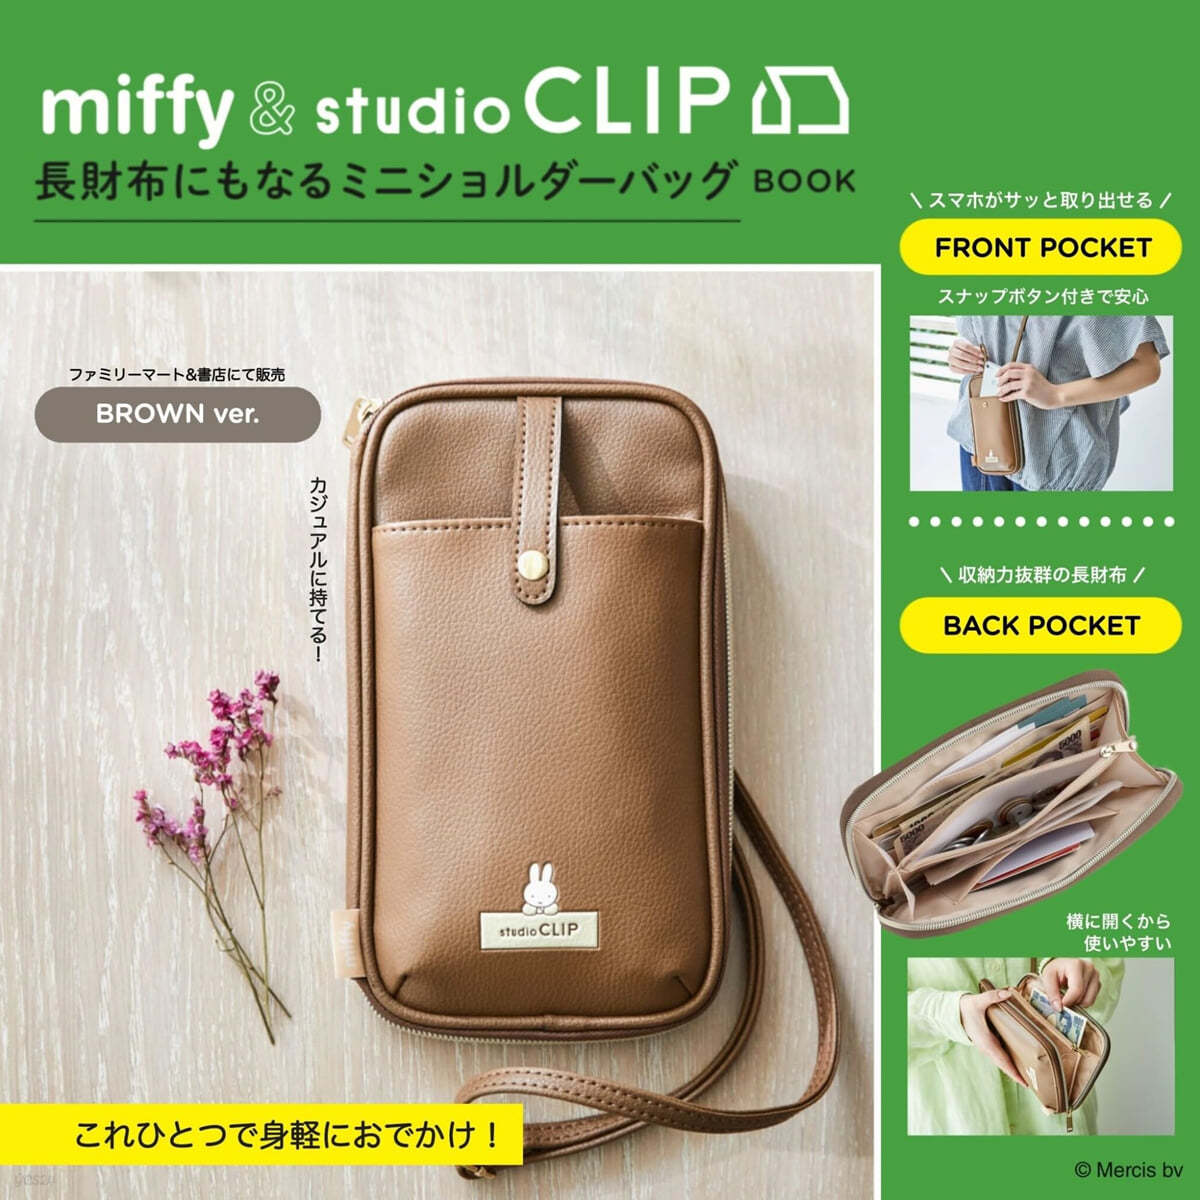 miffy &amp; studio CLIP 長財布にもなるミニショルダ-バッグ BOOK BROWN ver.